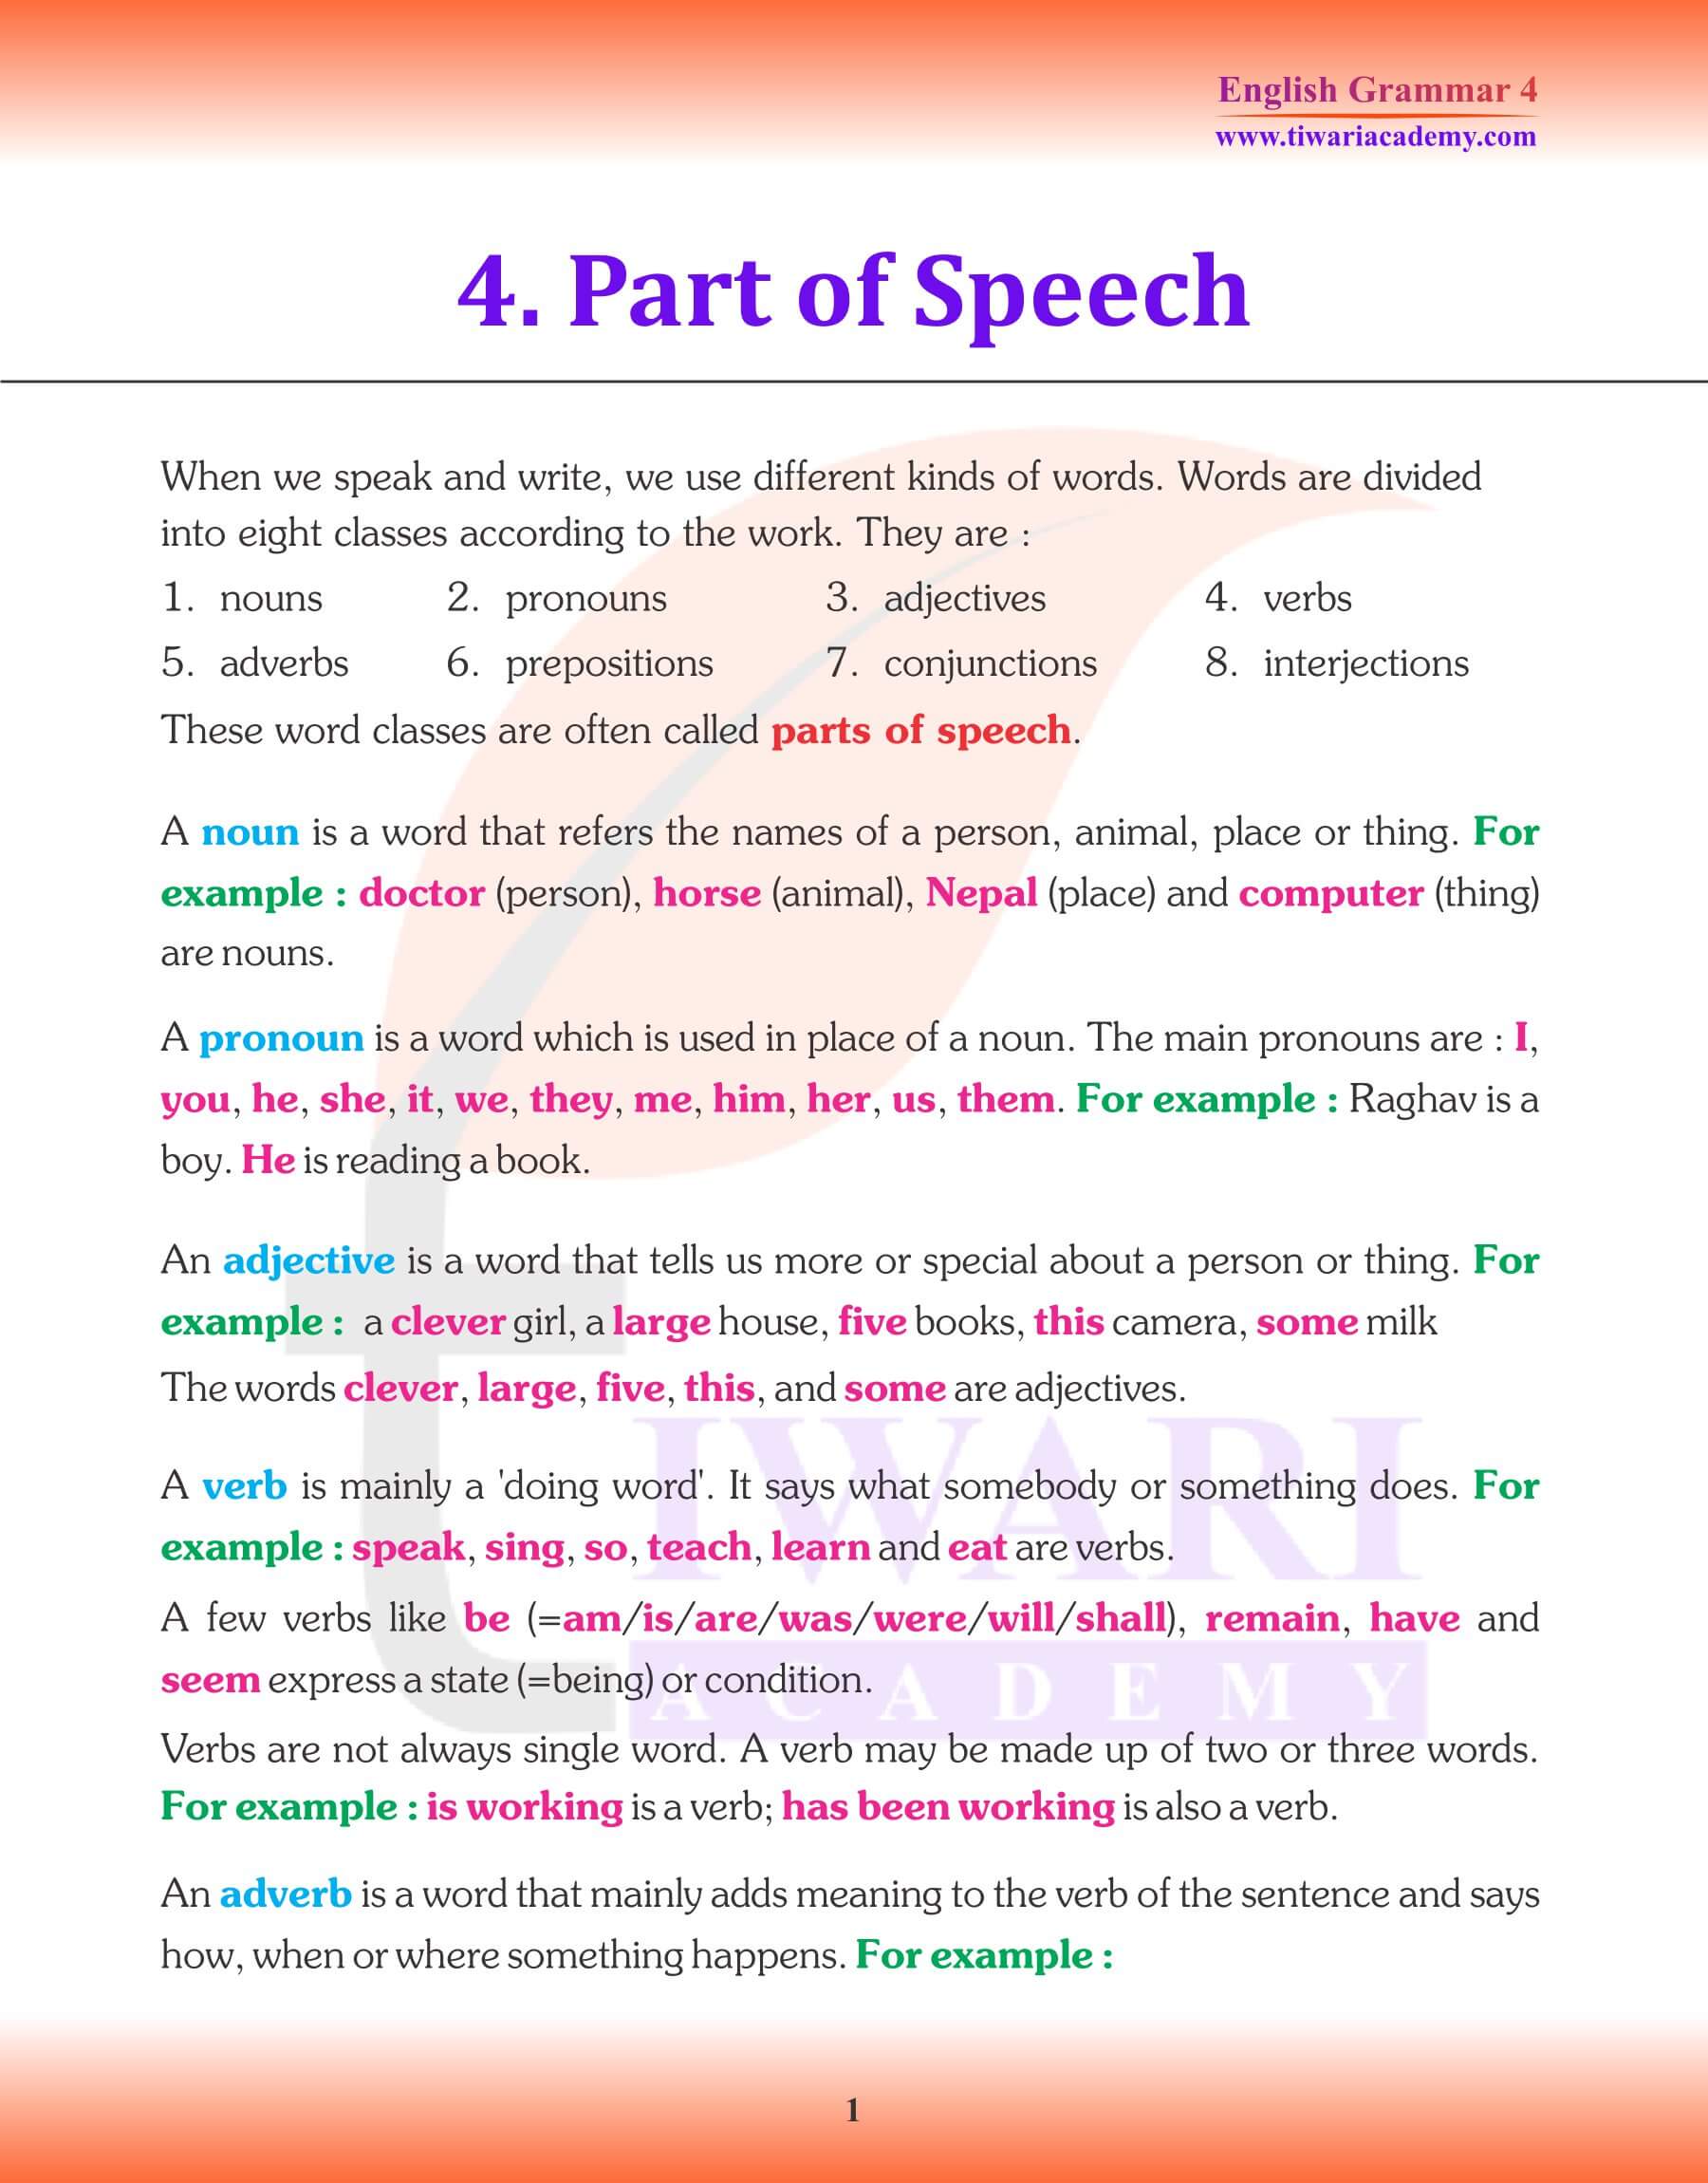 Revision of Class 4 English Grammar Chapter 4 Part of Speech